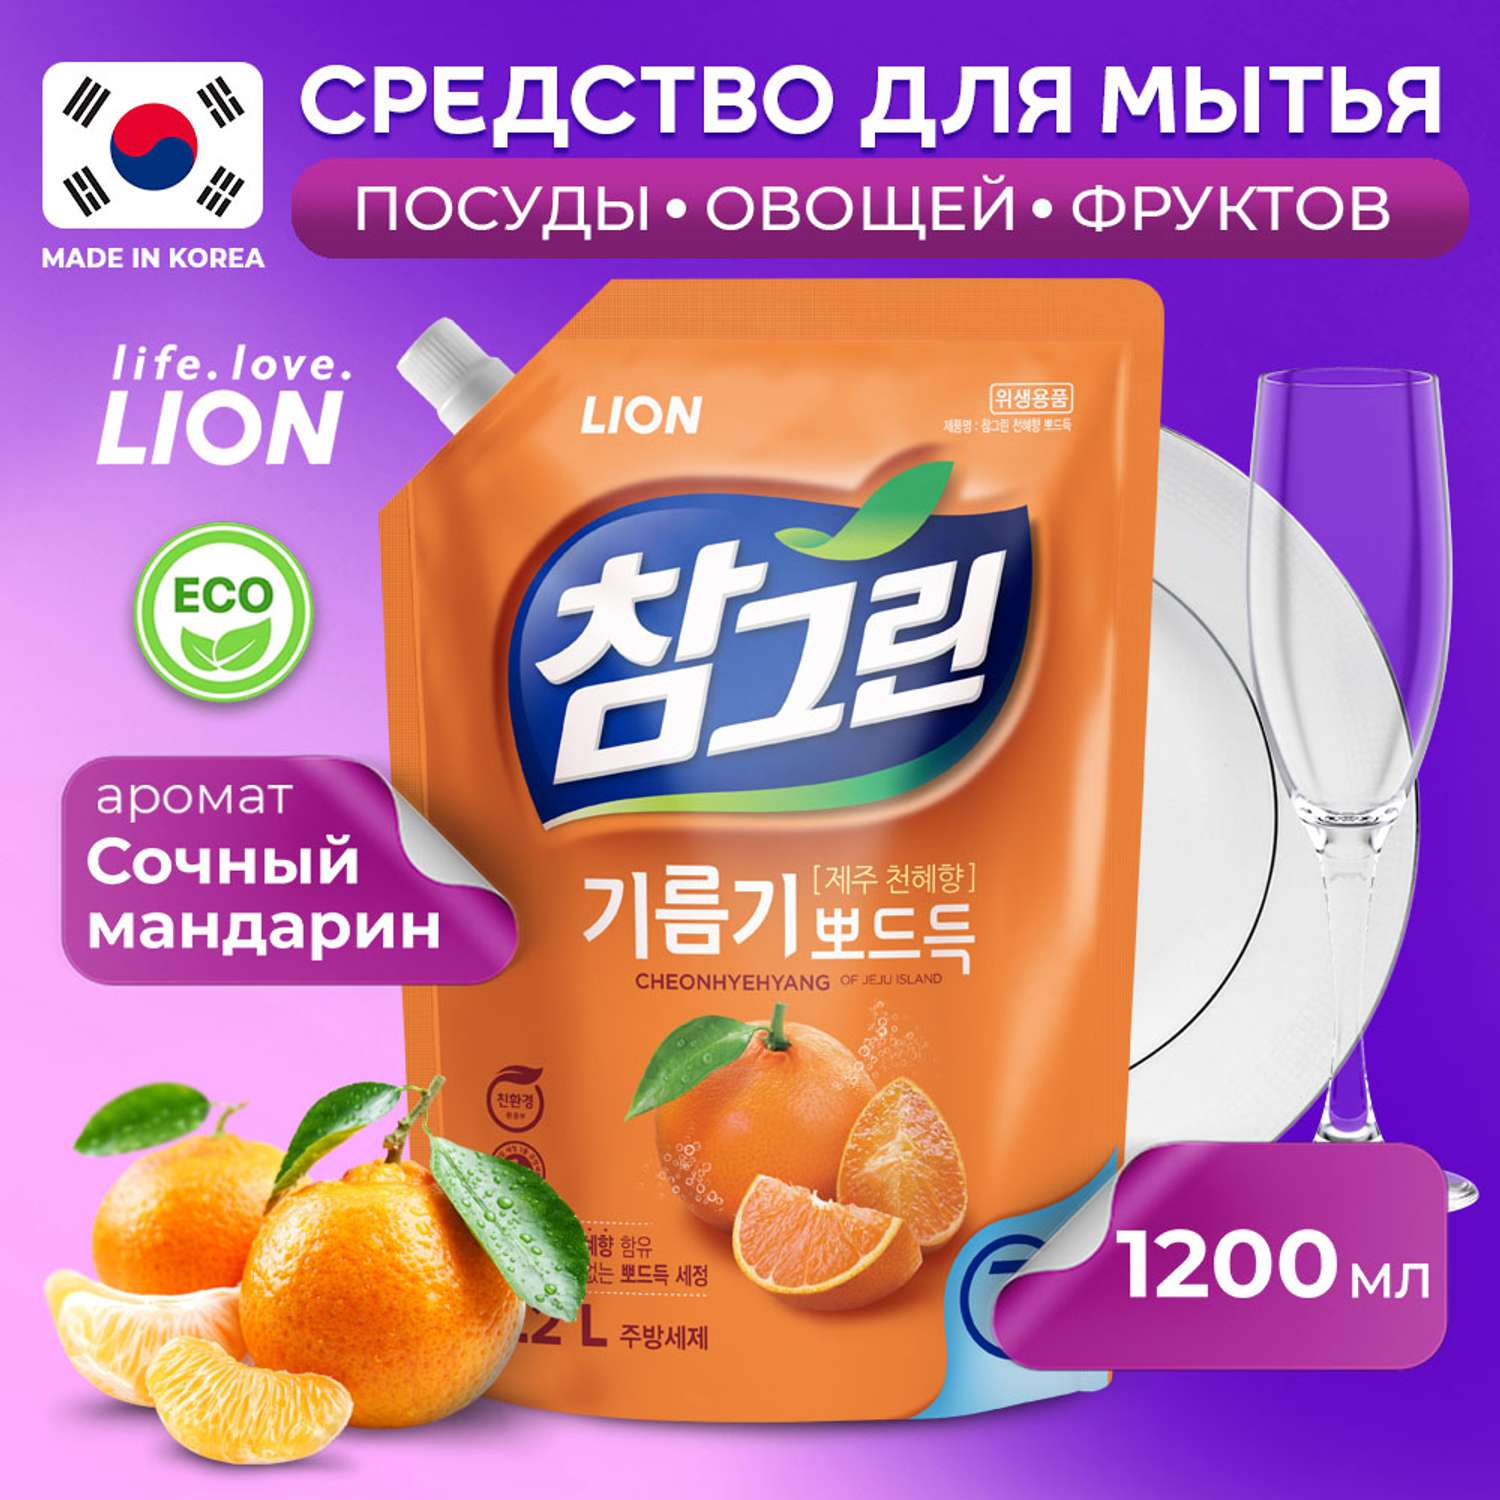 Средство для мытья посуды Lion chamgreen мандарин мягкая упаковка 1200 мл - фото 1